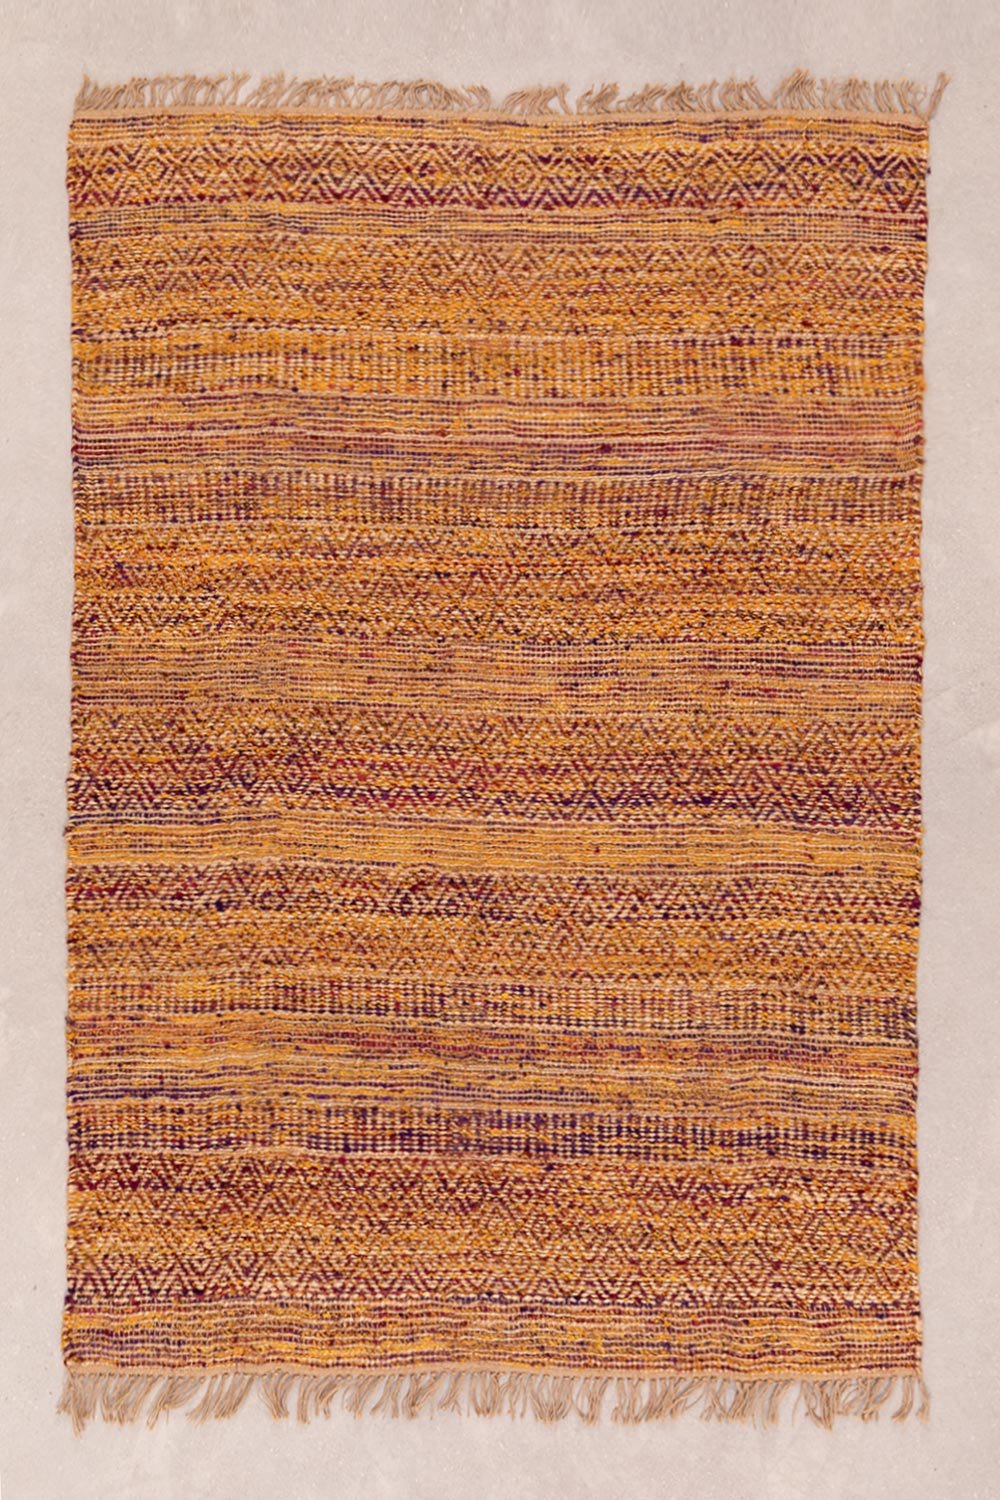 Tapis Jute Naturel (242x162 cm) Drigy, image de la galerie 1